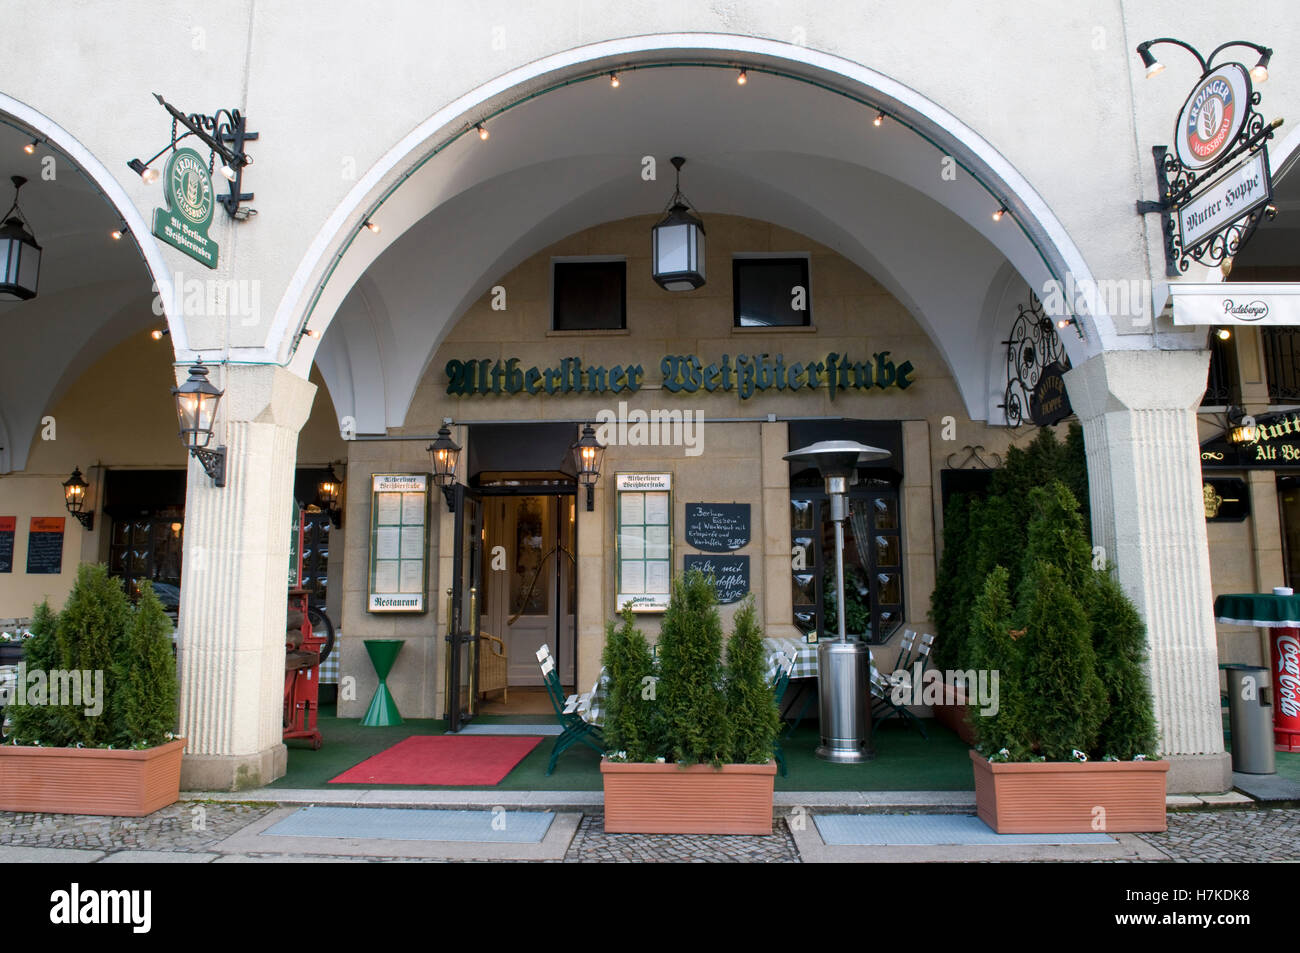 Altberliner Weissbierstube, Mutter Hoppe, a pub in the Nikolai Quarter, Berlin Stock Photo